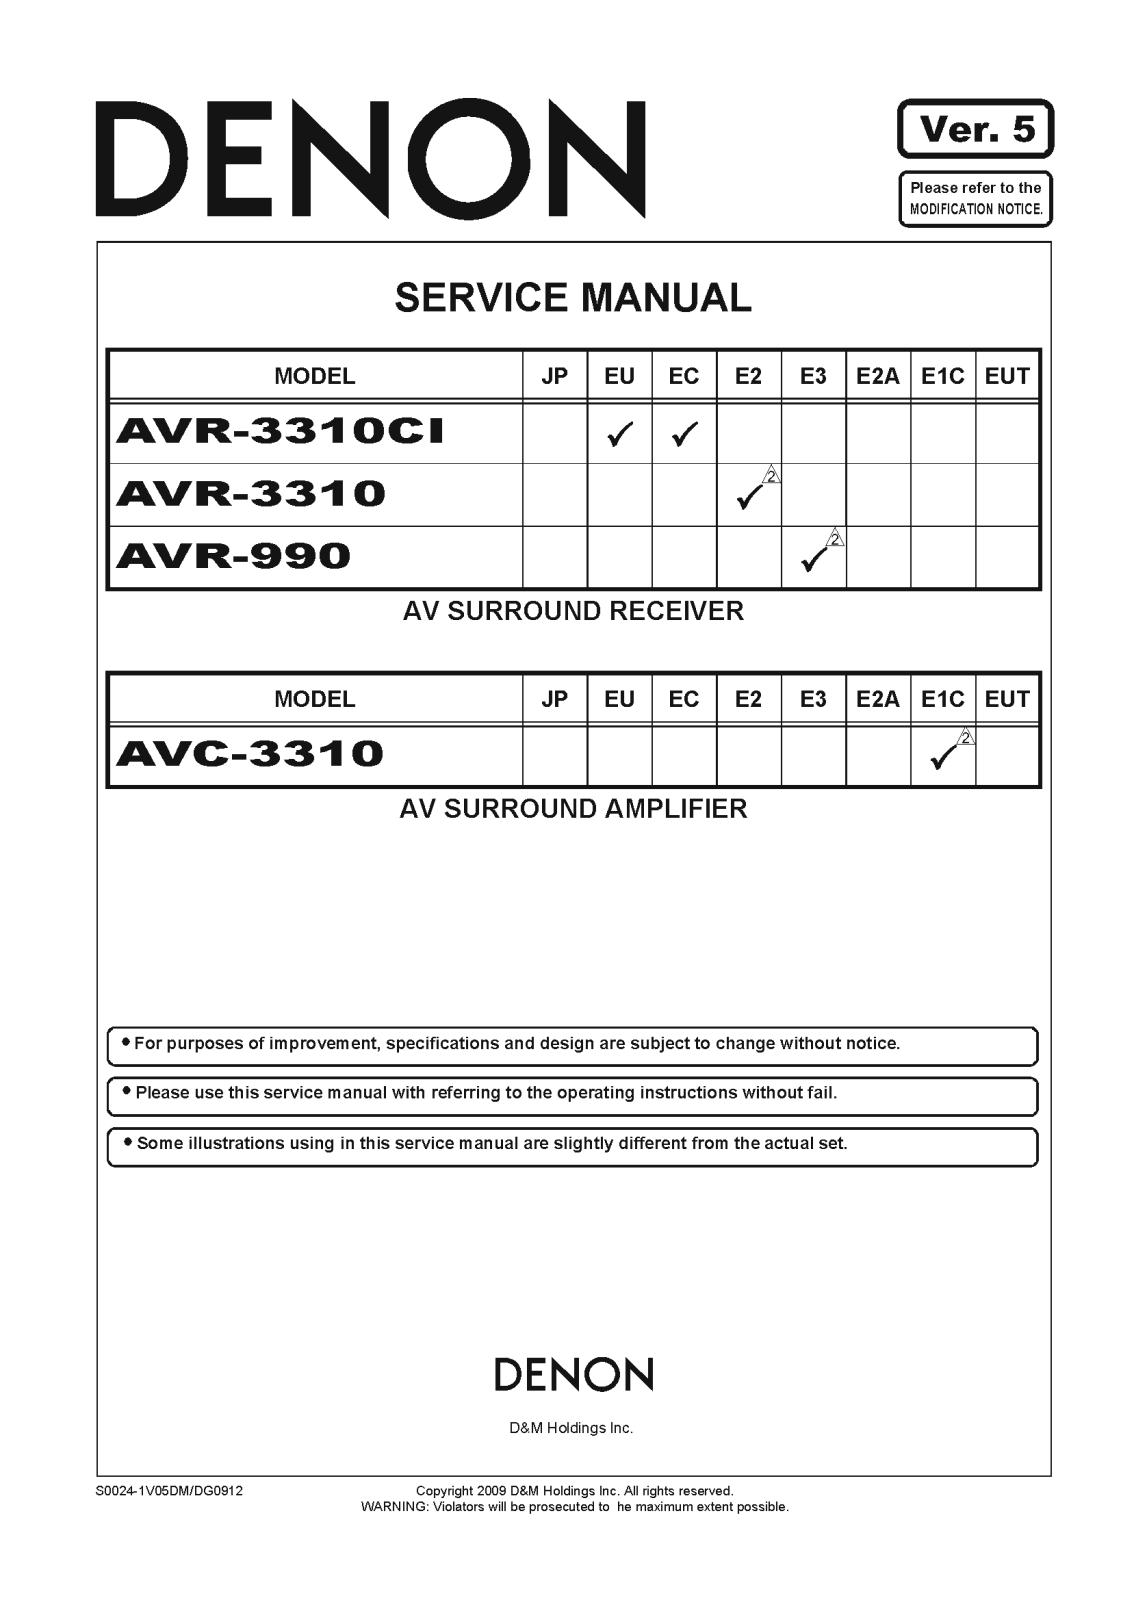 Denon AVR-990, AVR-3310-CI, AVR-3310, AVC-3310 Service Manual